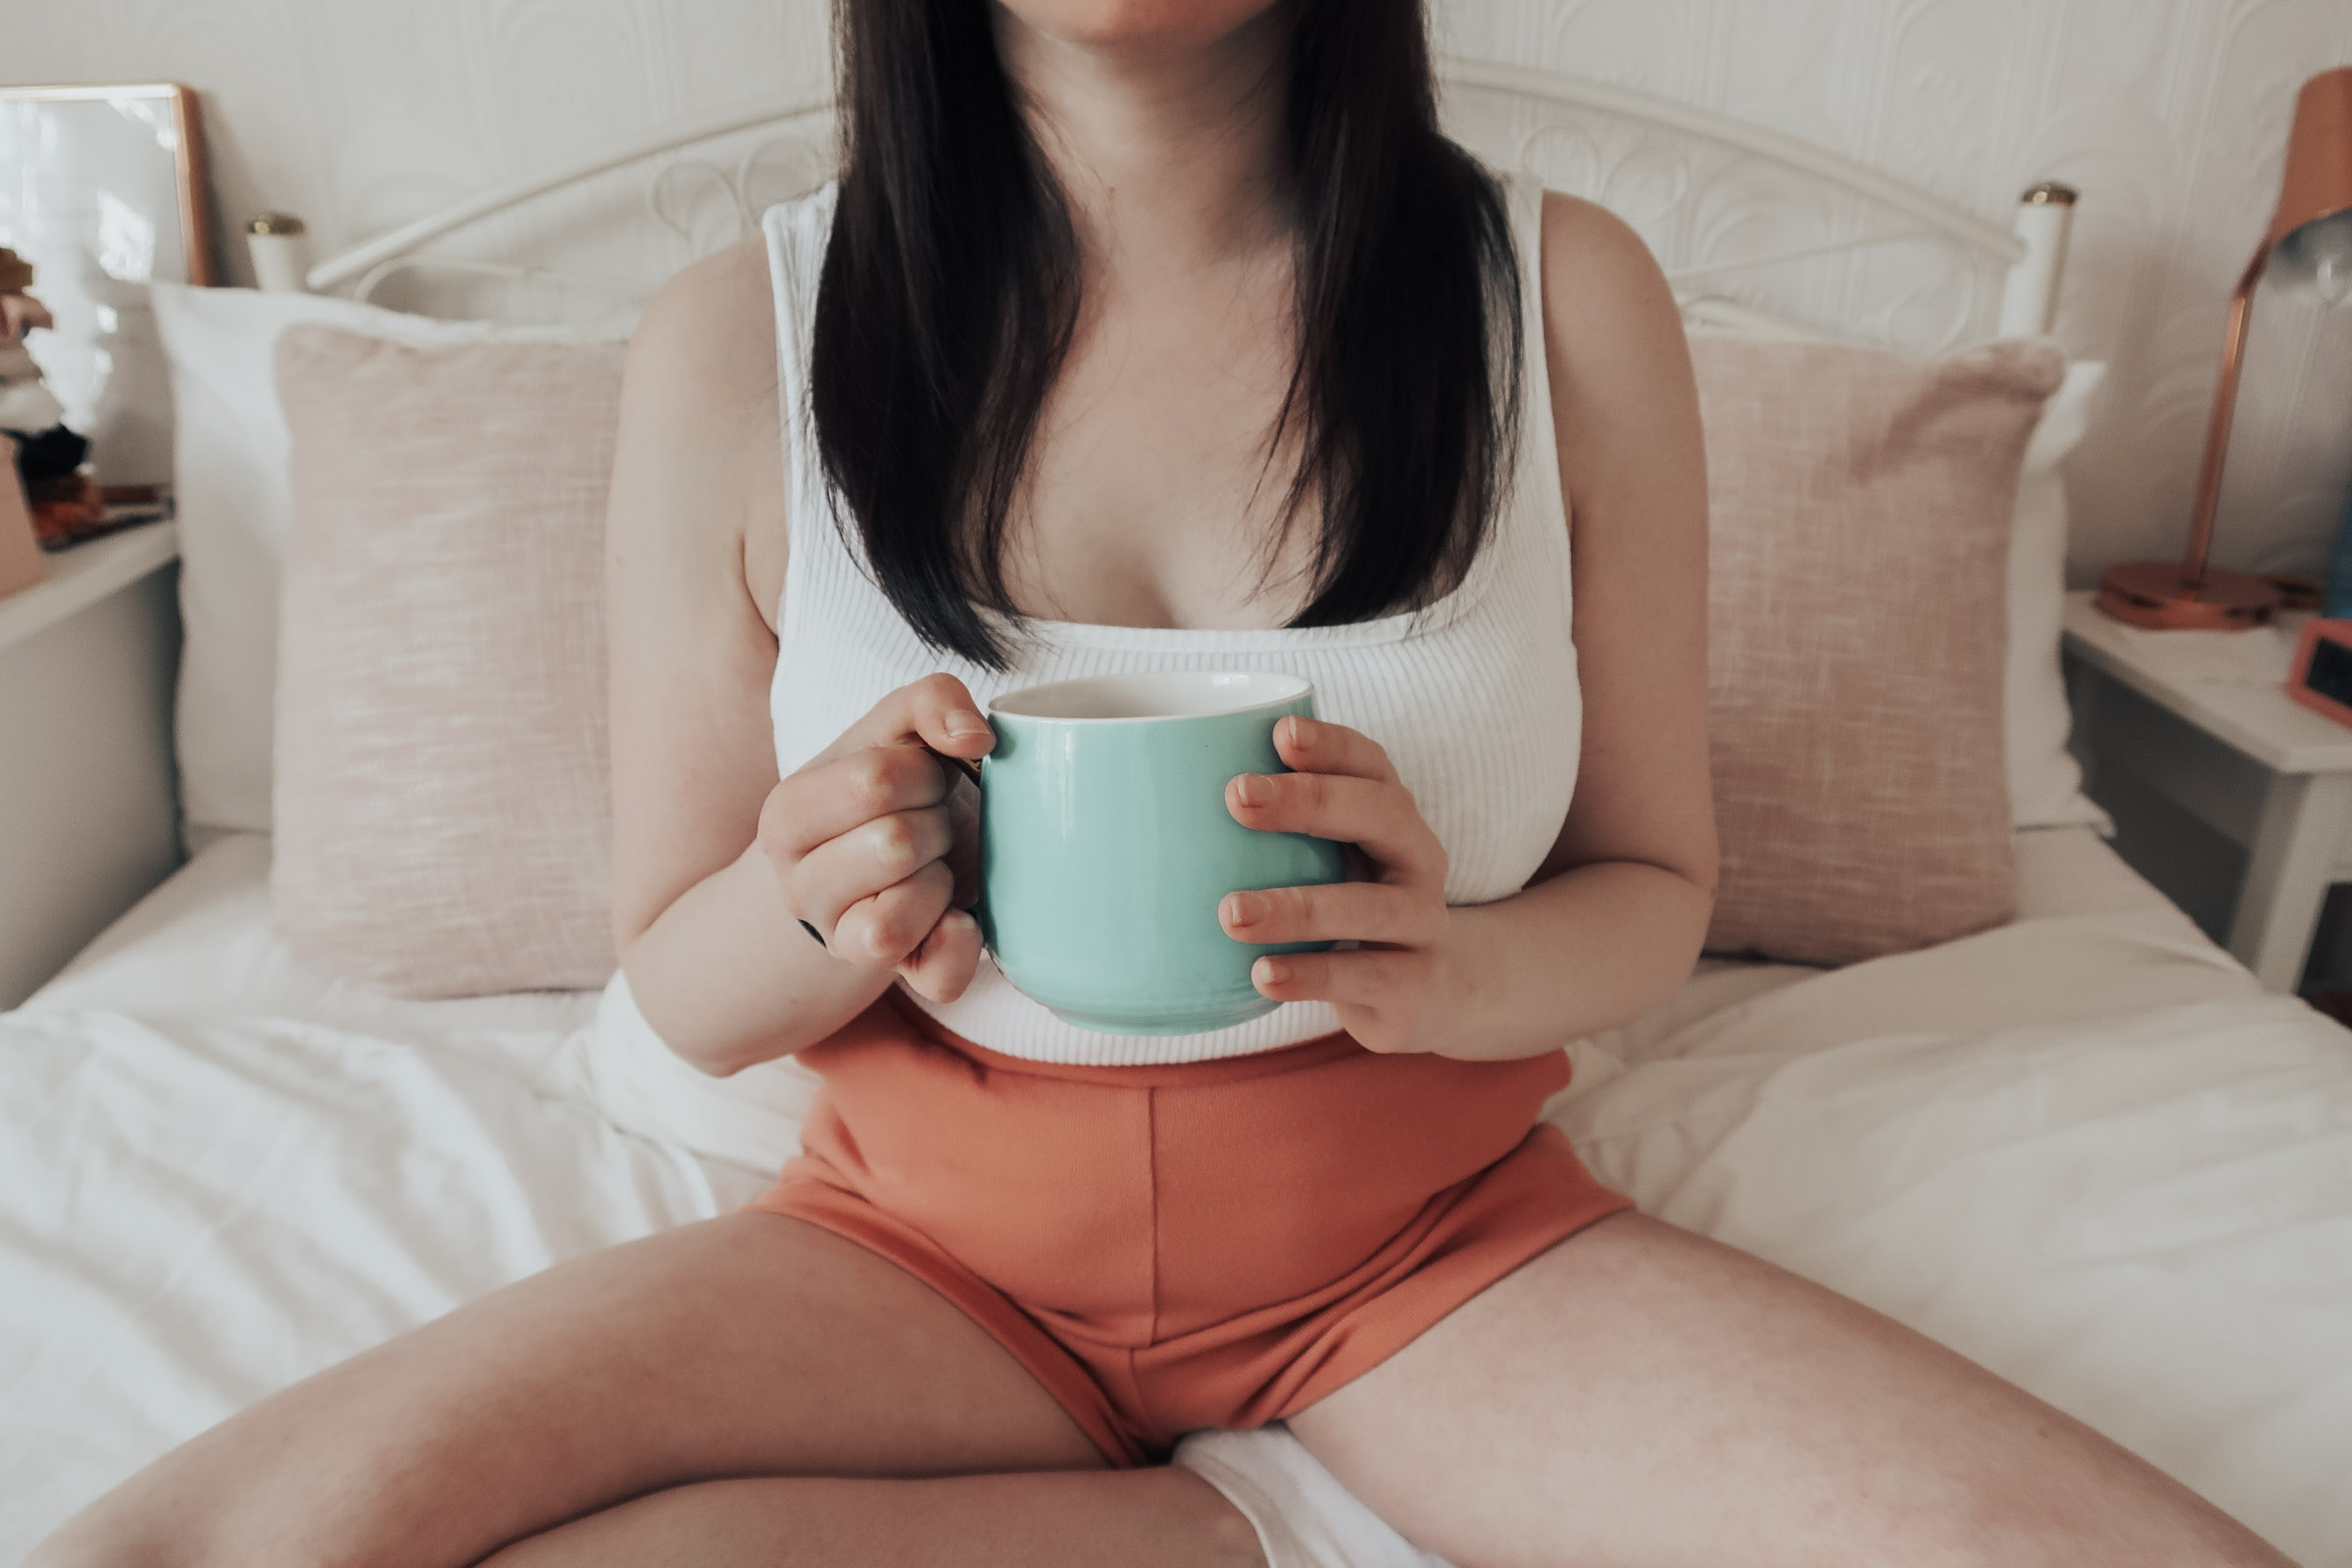 A woman holding a turquoise mug